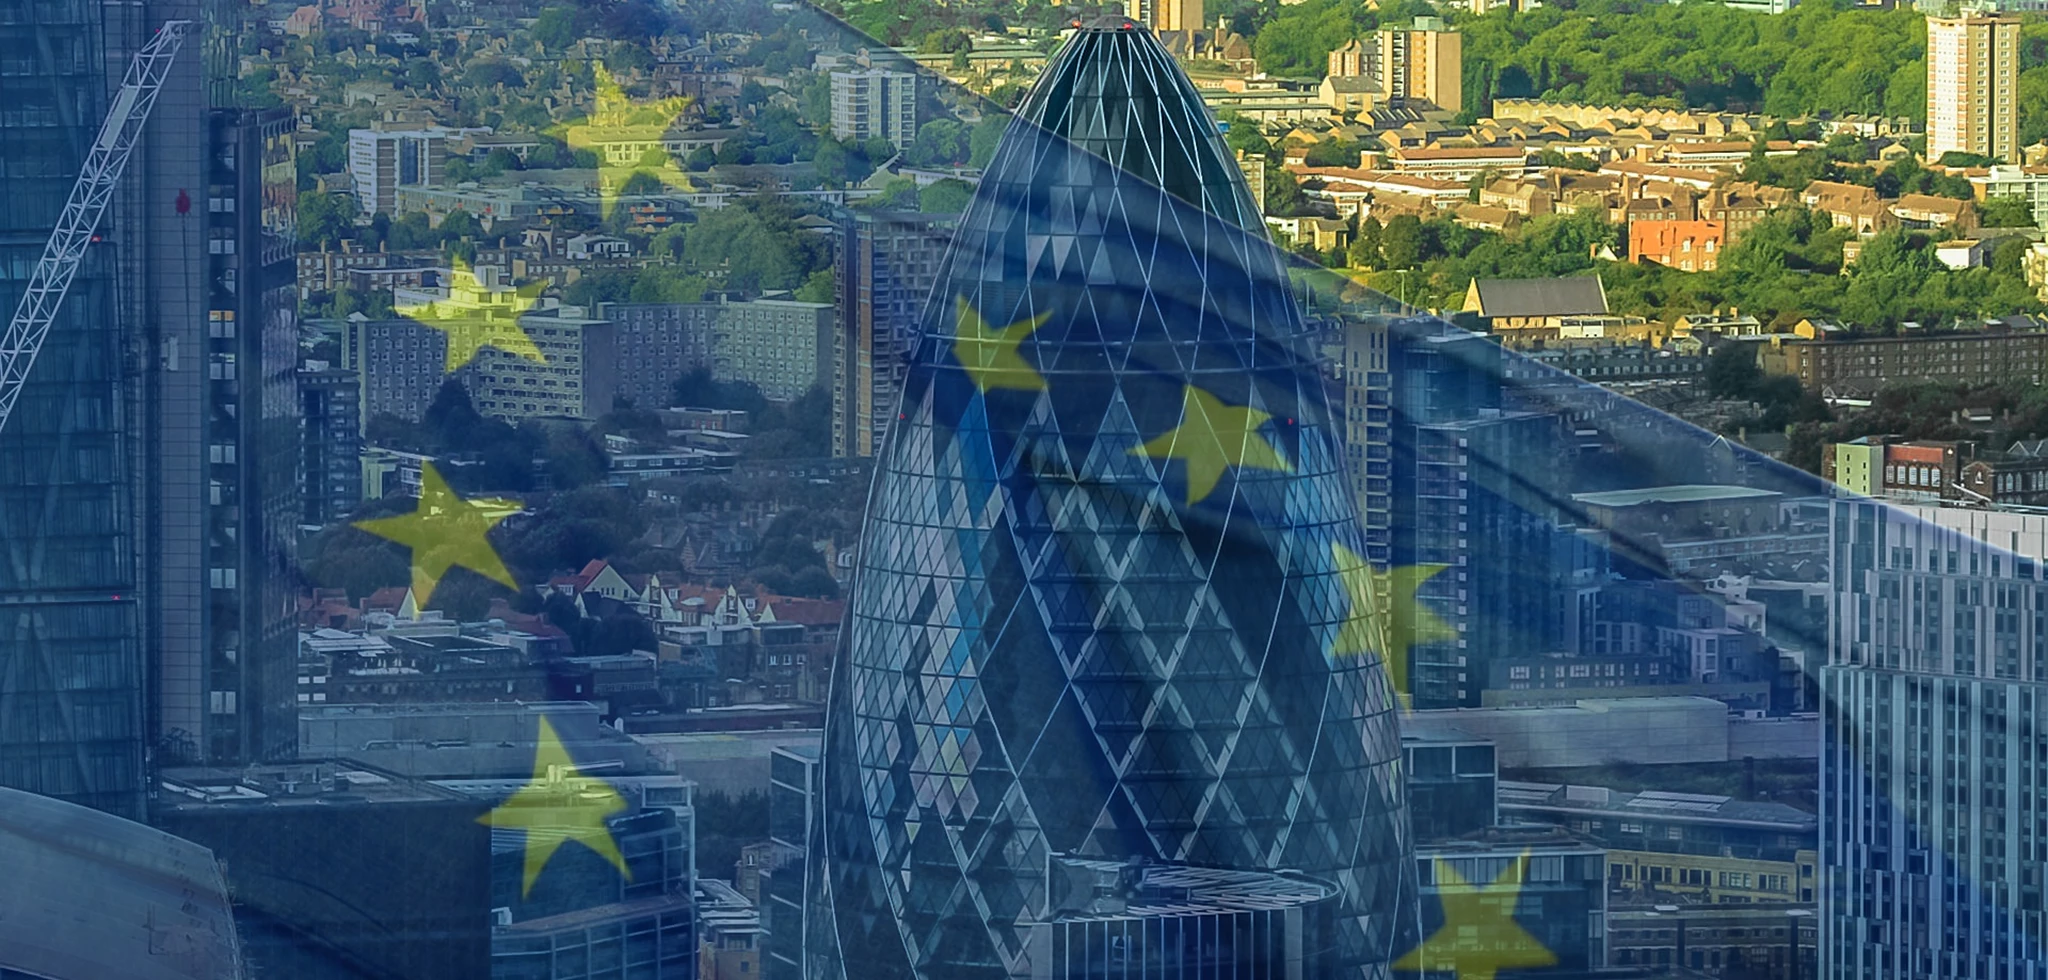 Gherkin, City of London - London, UK / EU (Europe) flag